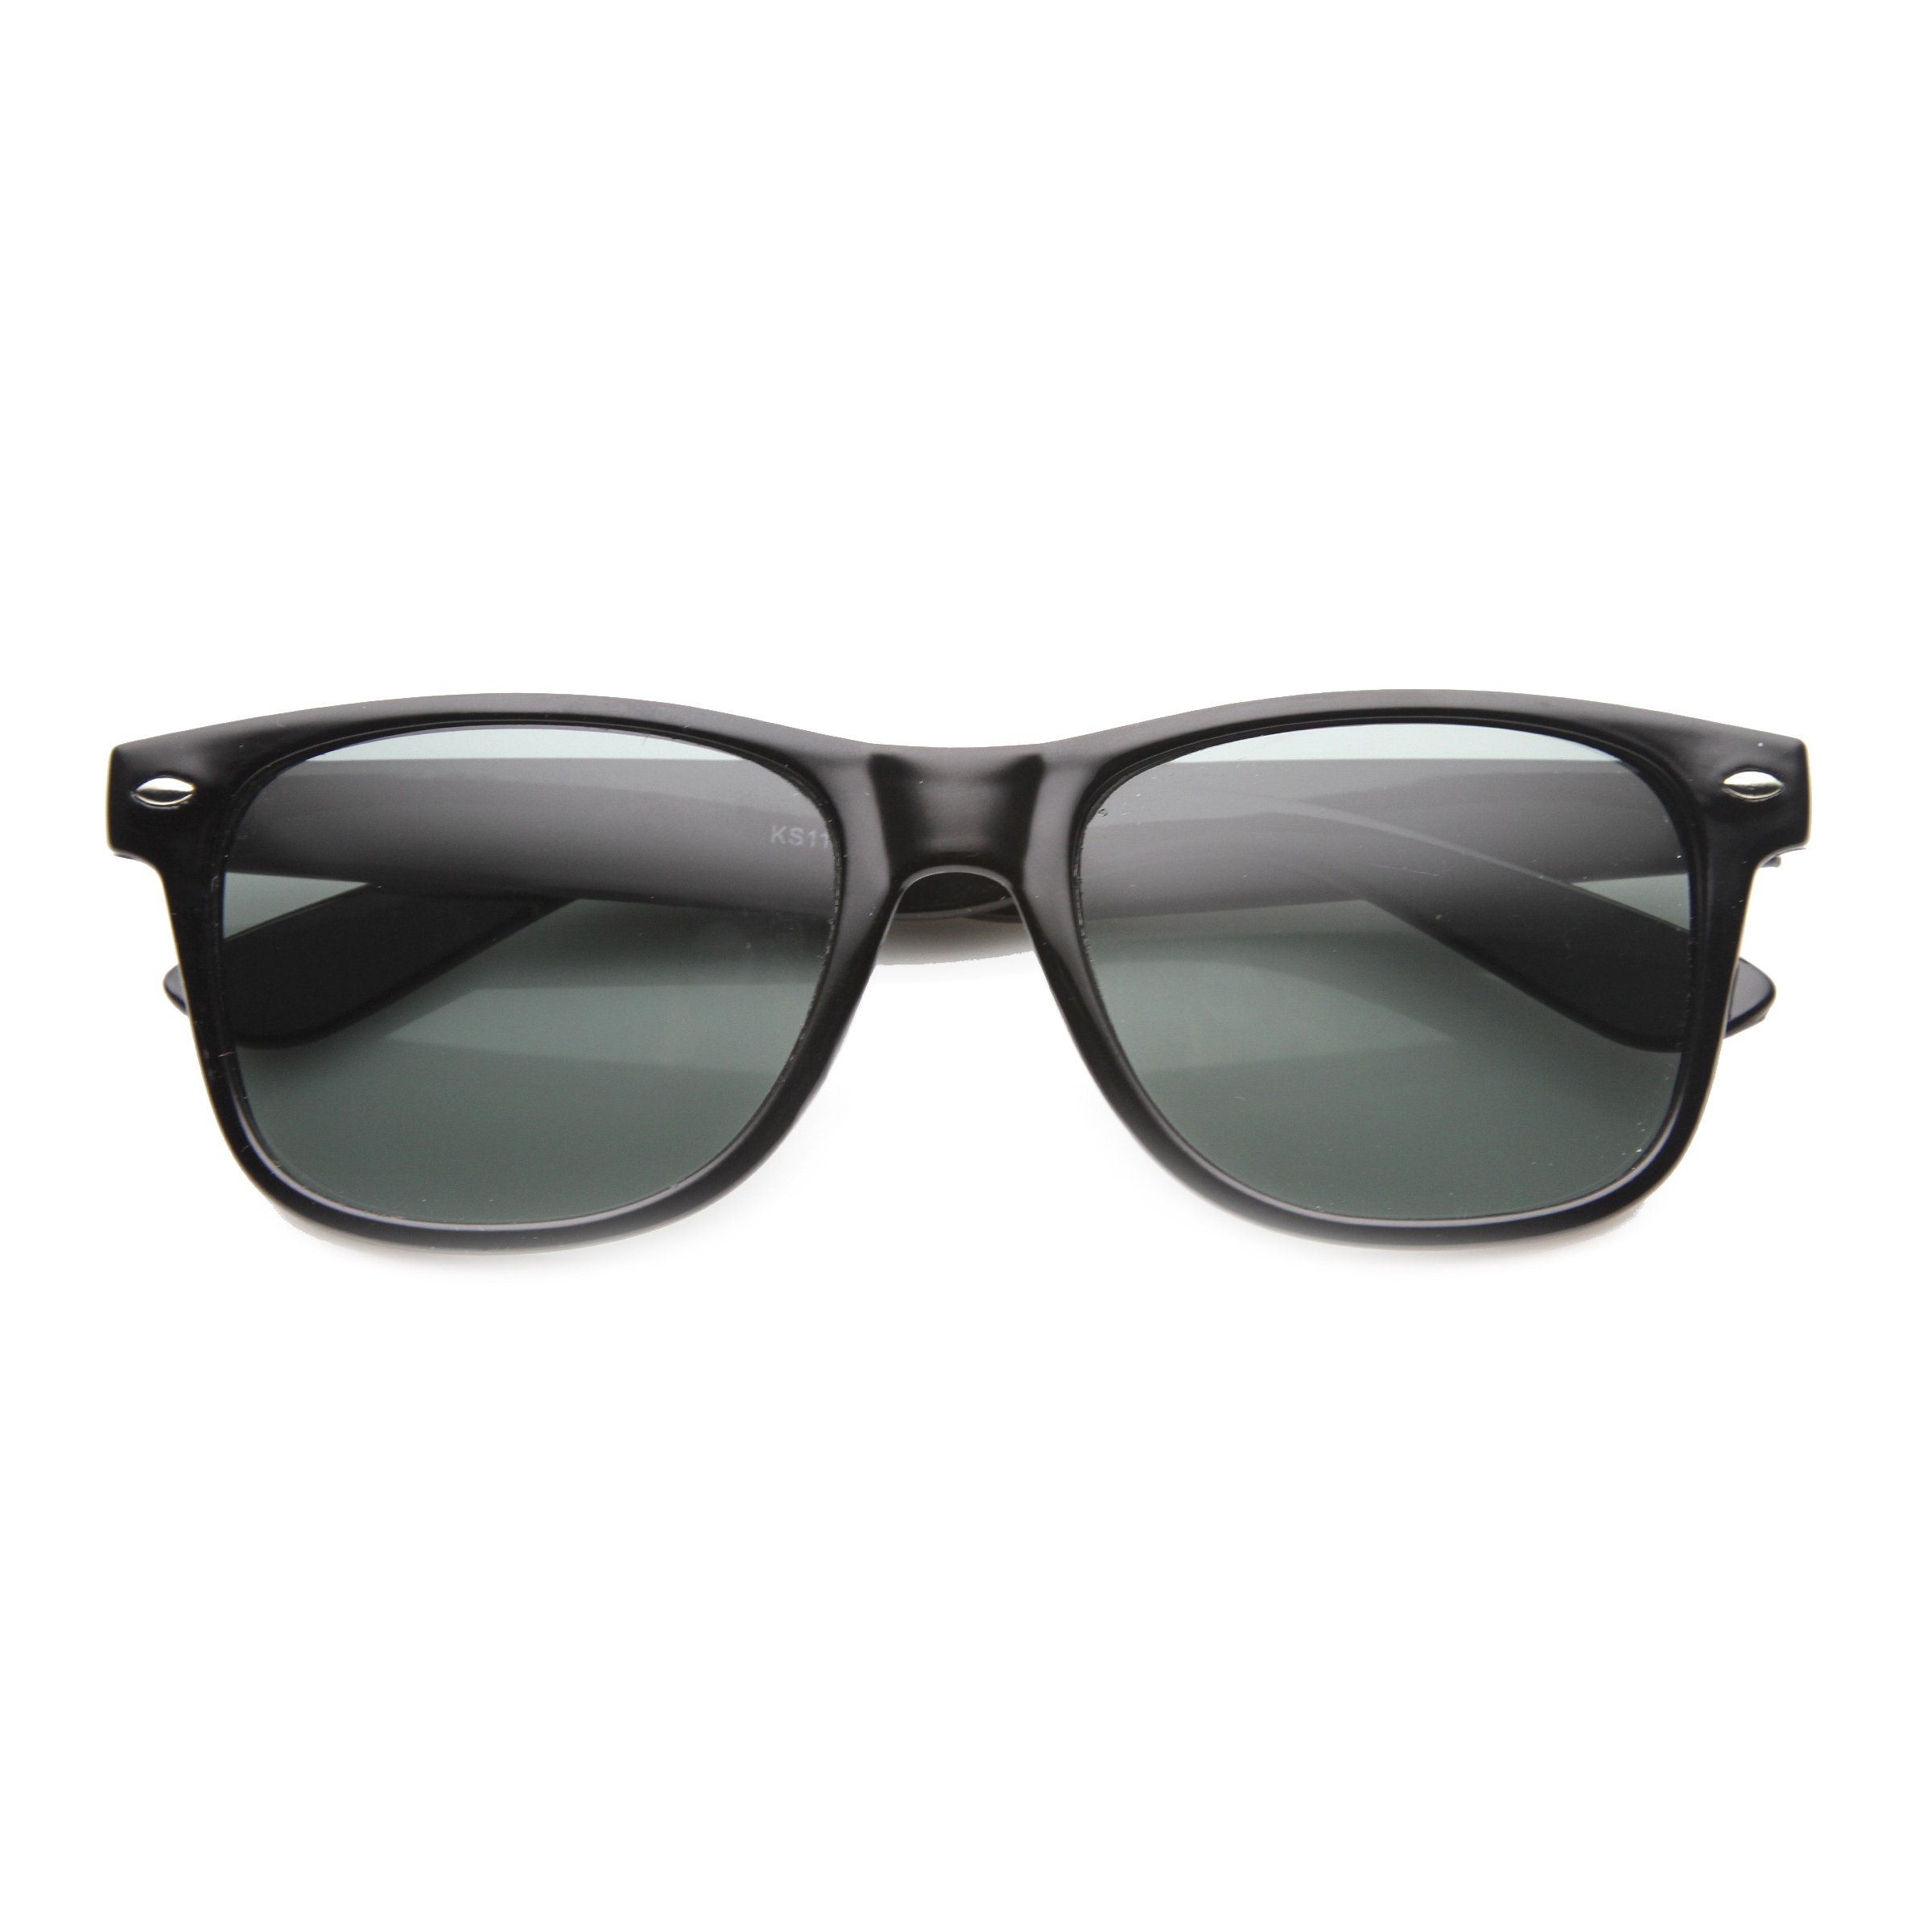 Classic 80s Retro Large Classic Horned Rim Style Sunglasses Eyewear - 8452 - Black / Glass Lens